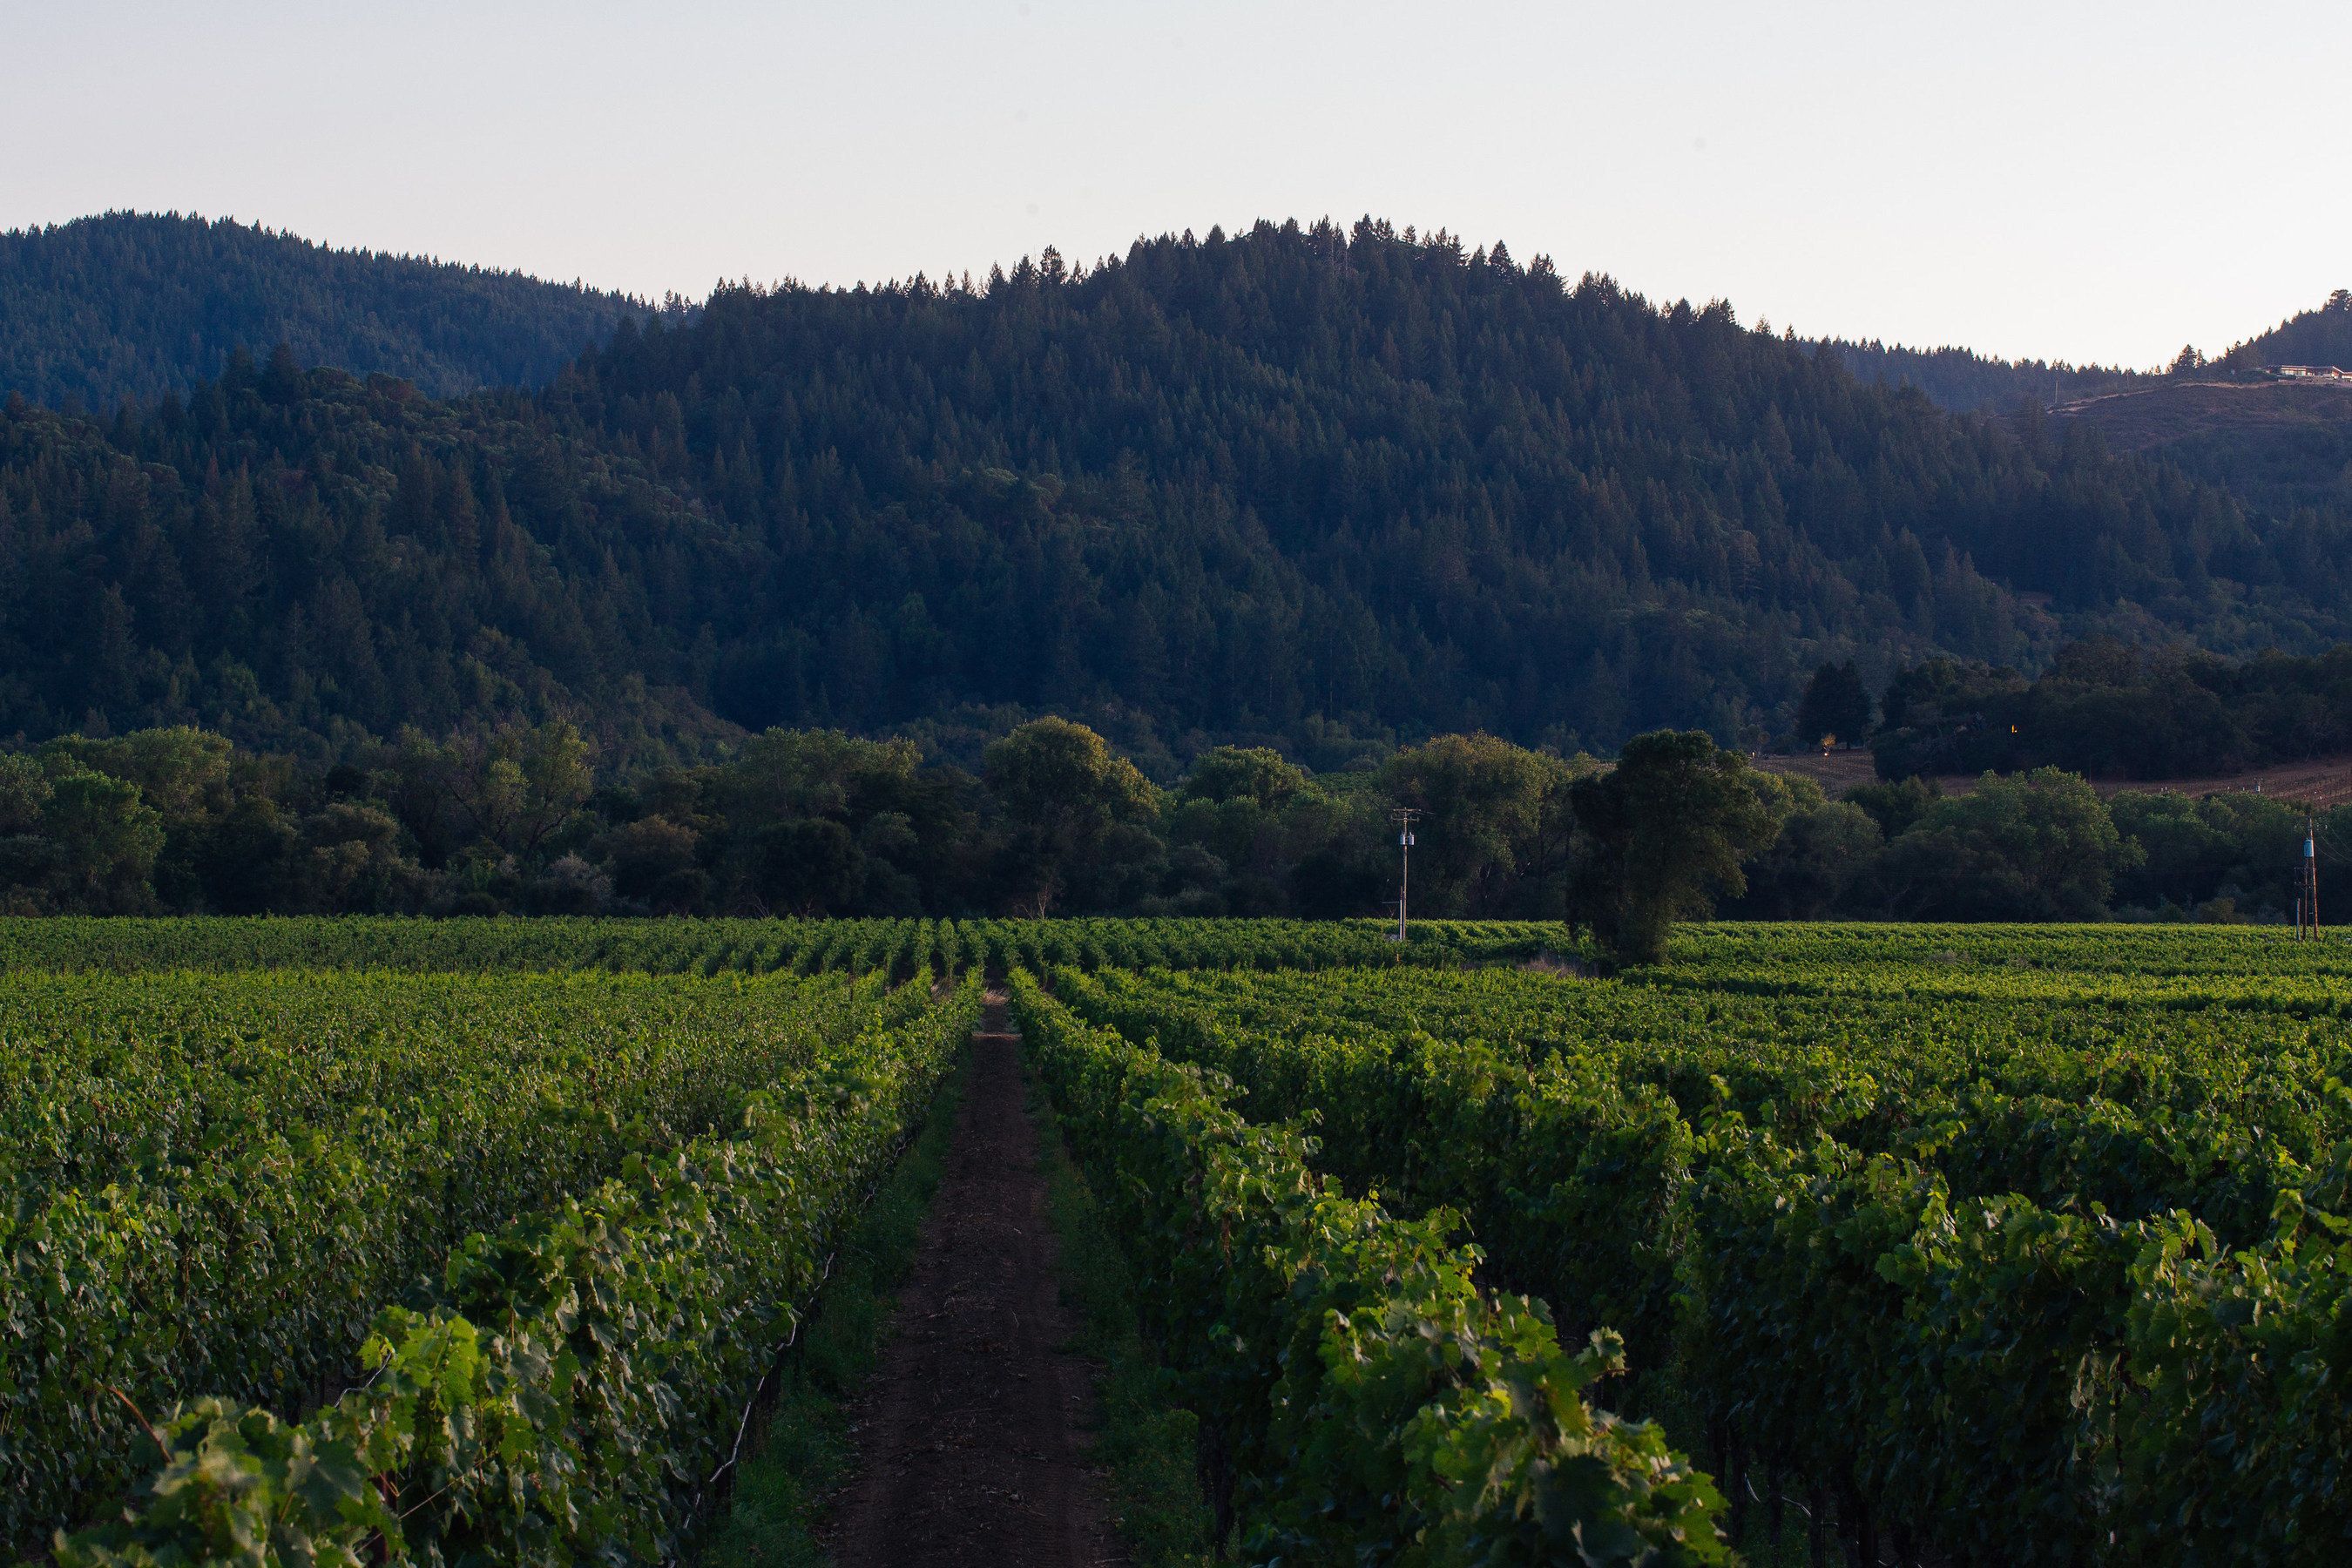 Seghesio Family Vineyards' Cortina Vineyard in Dry Creek Valley